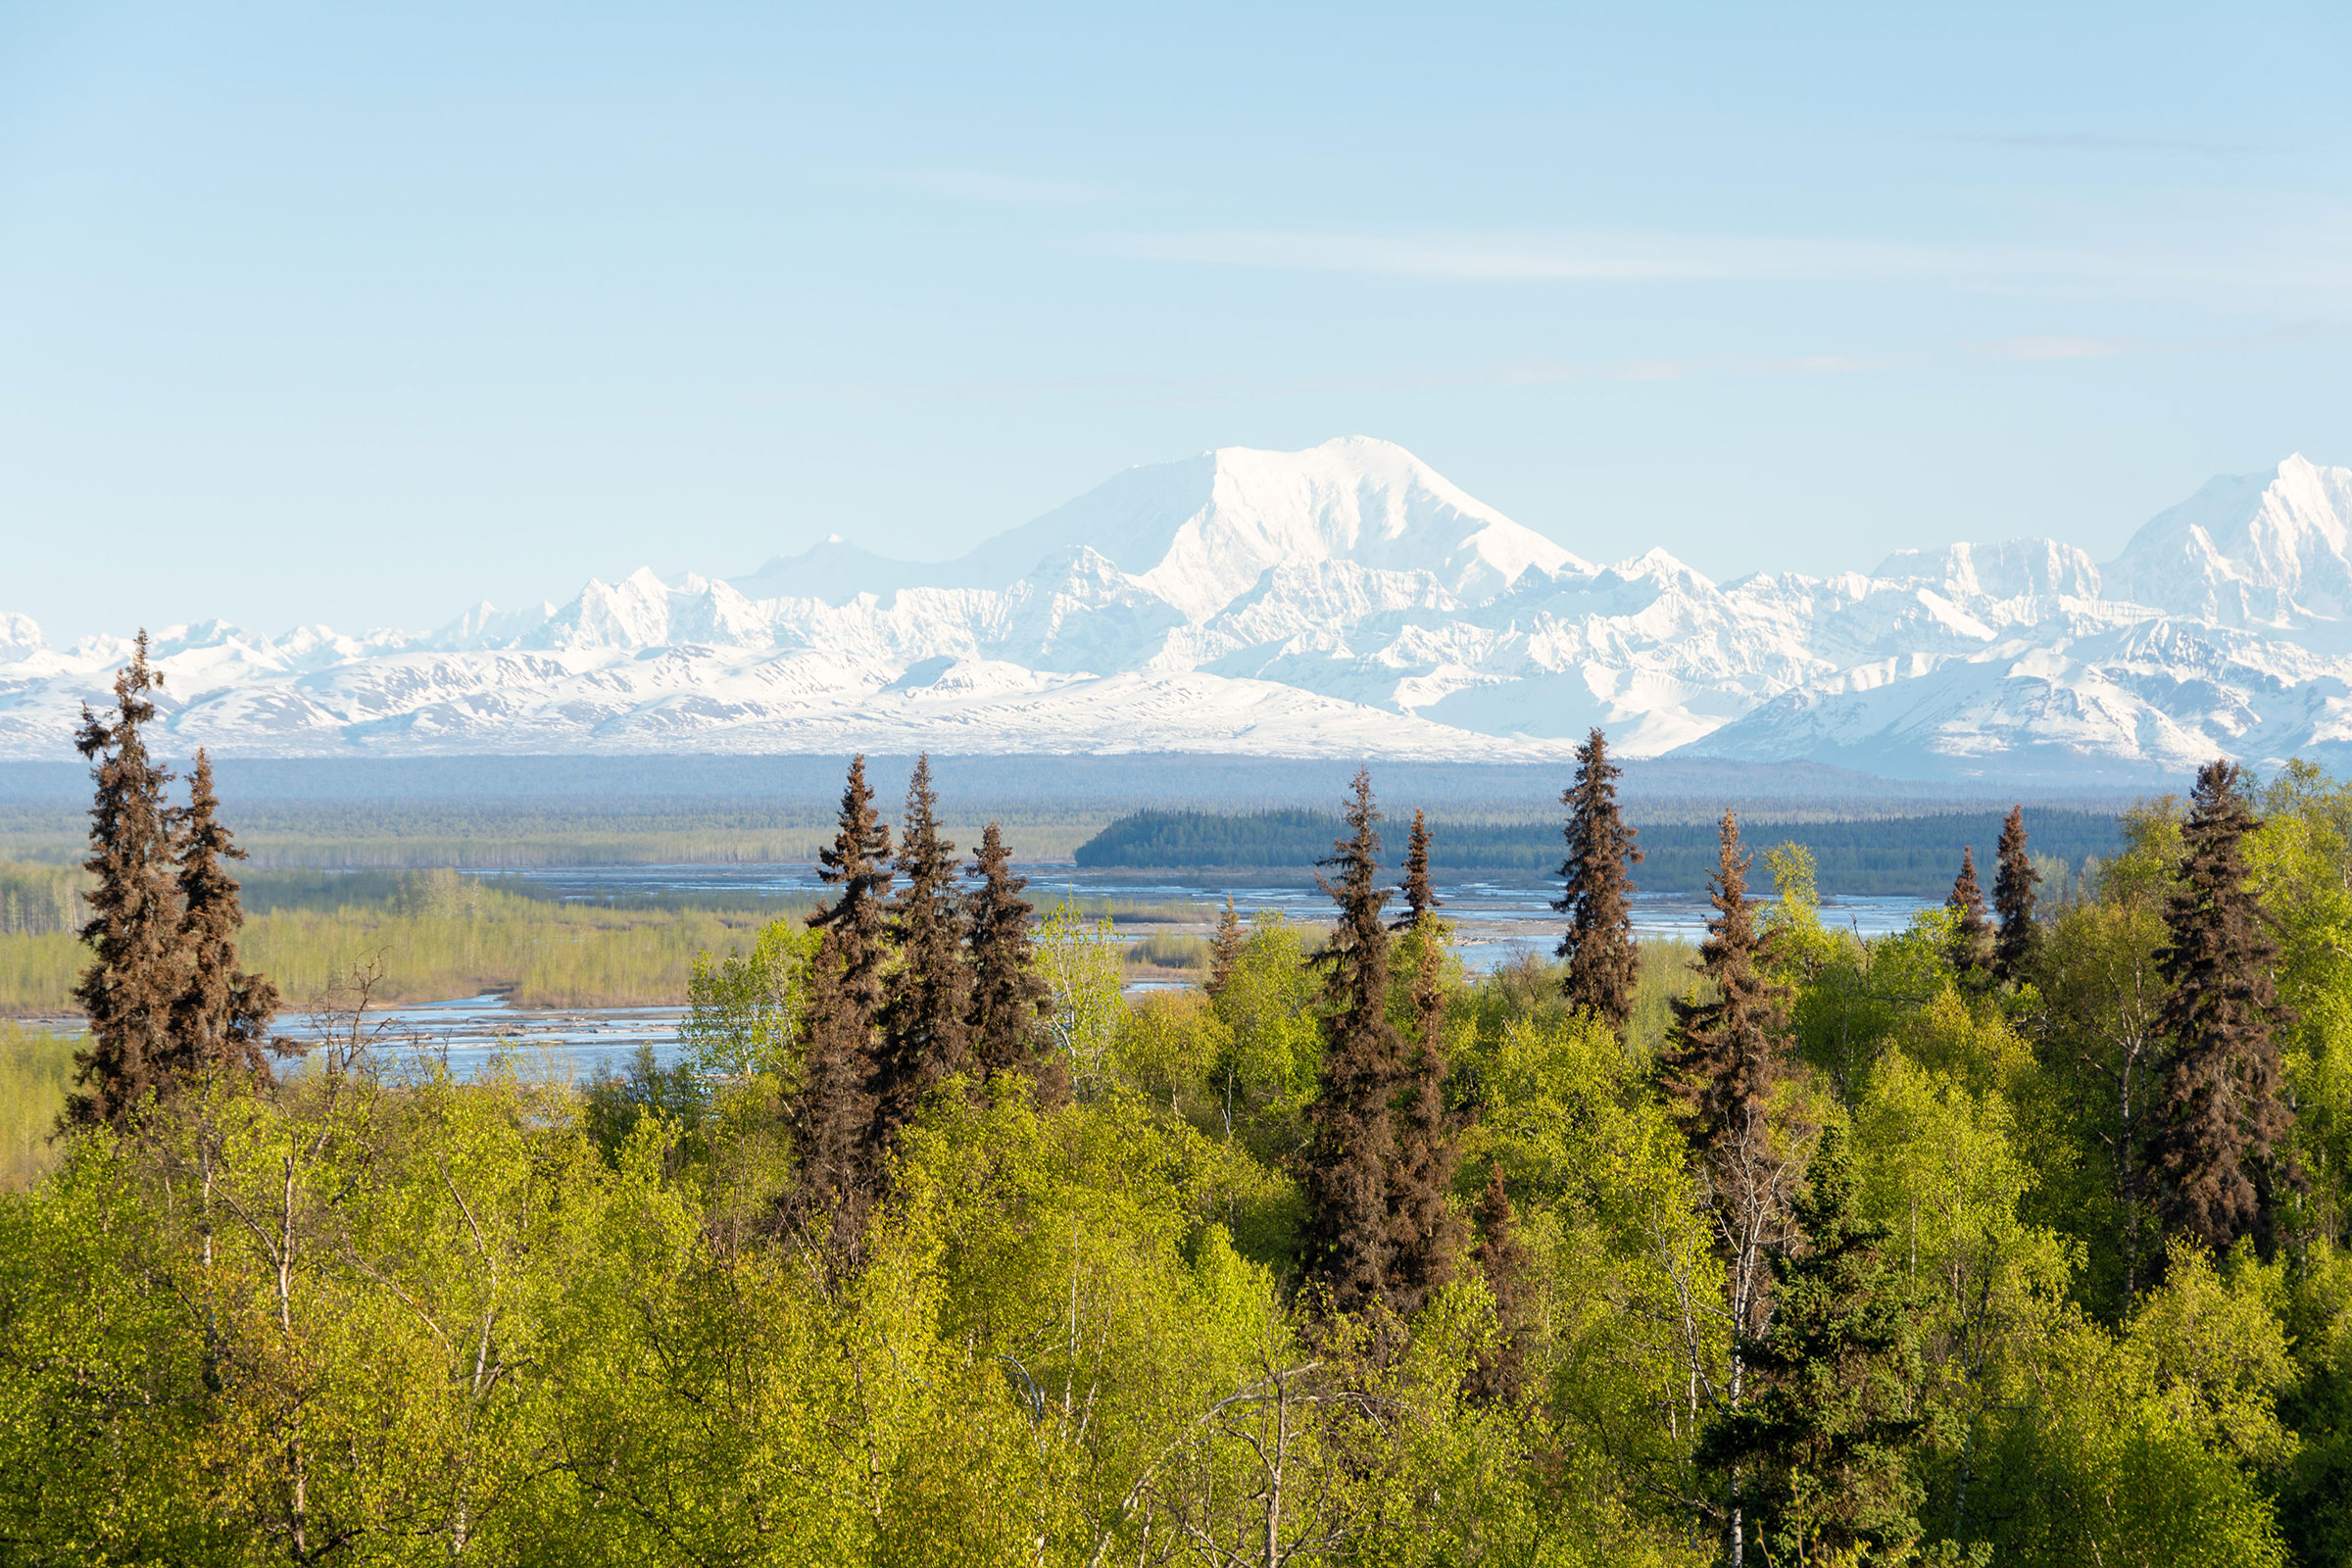 Mount Denali and adjacent snow-capped mountains as seen from Talkeetna, Alaska. (Christy Stobbs—Alamy)